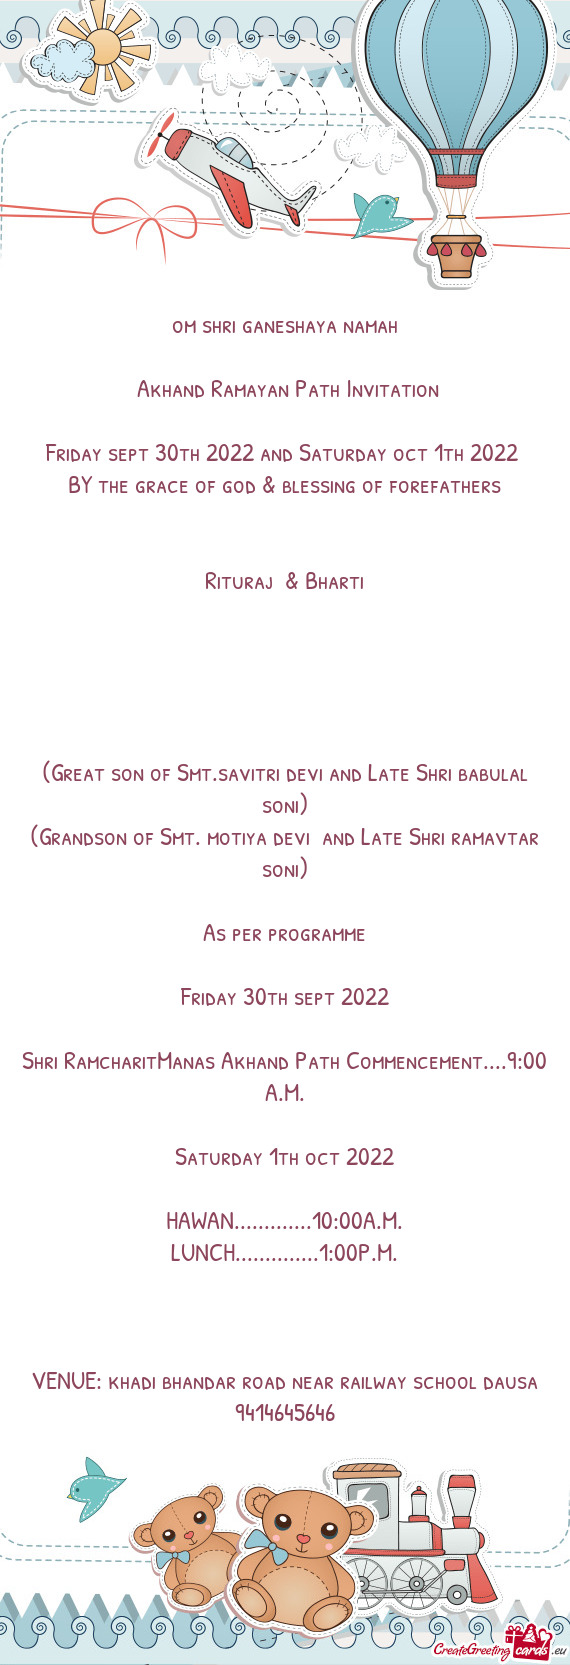 (Great son of Smt.savitri devi and Late Shri babulal soni)